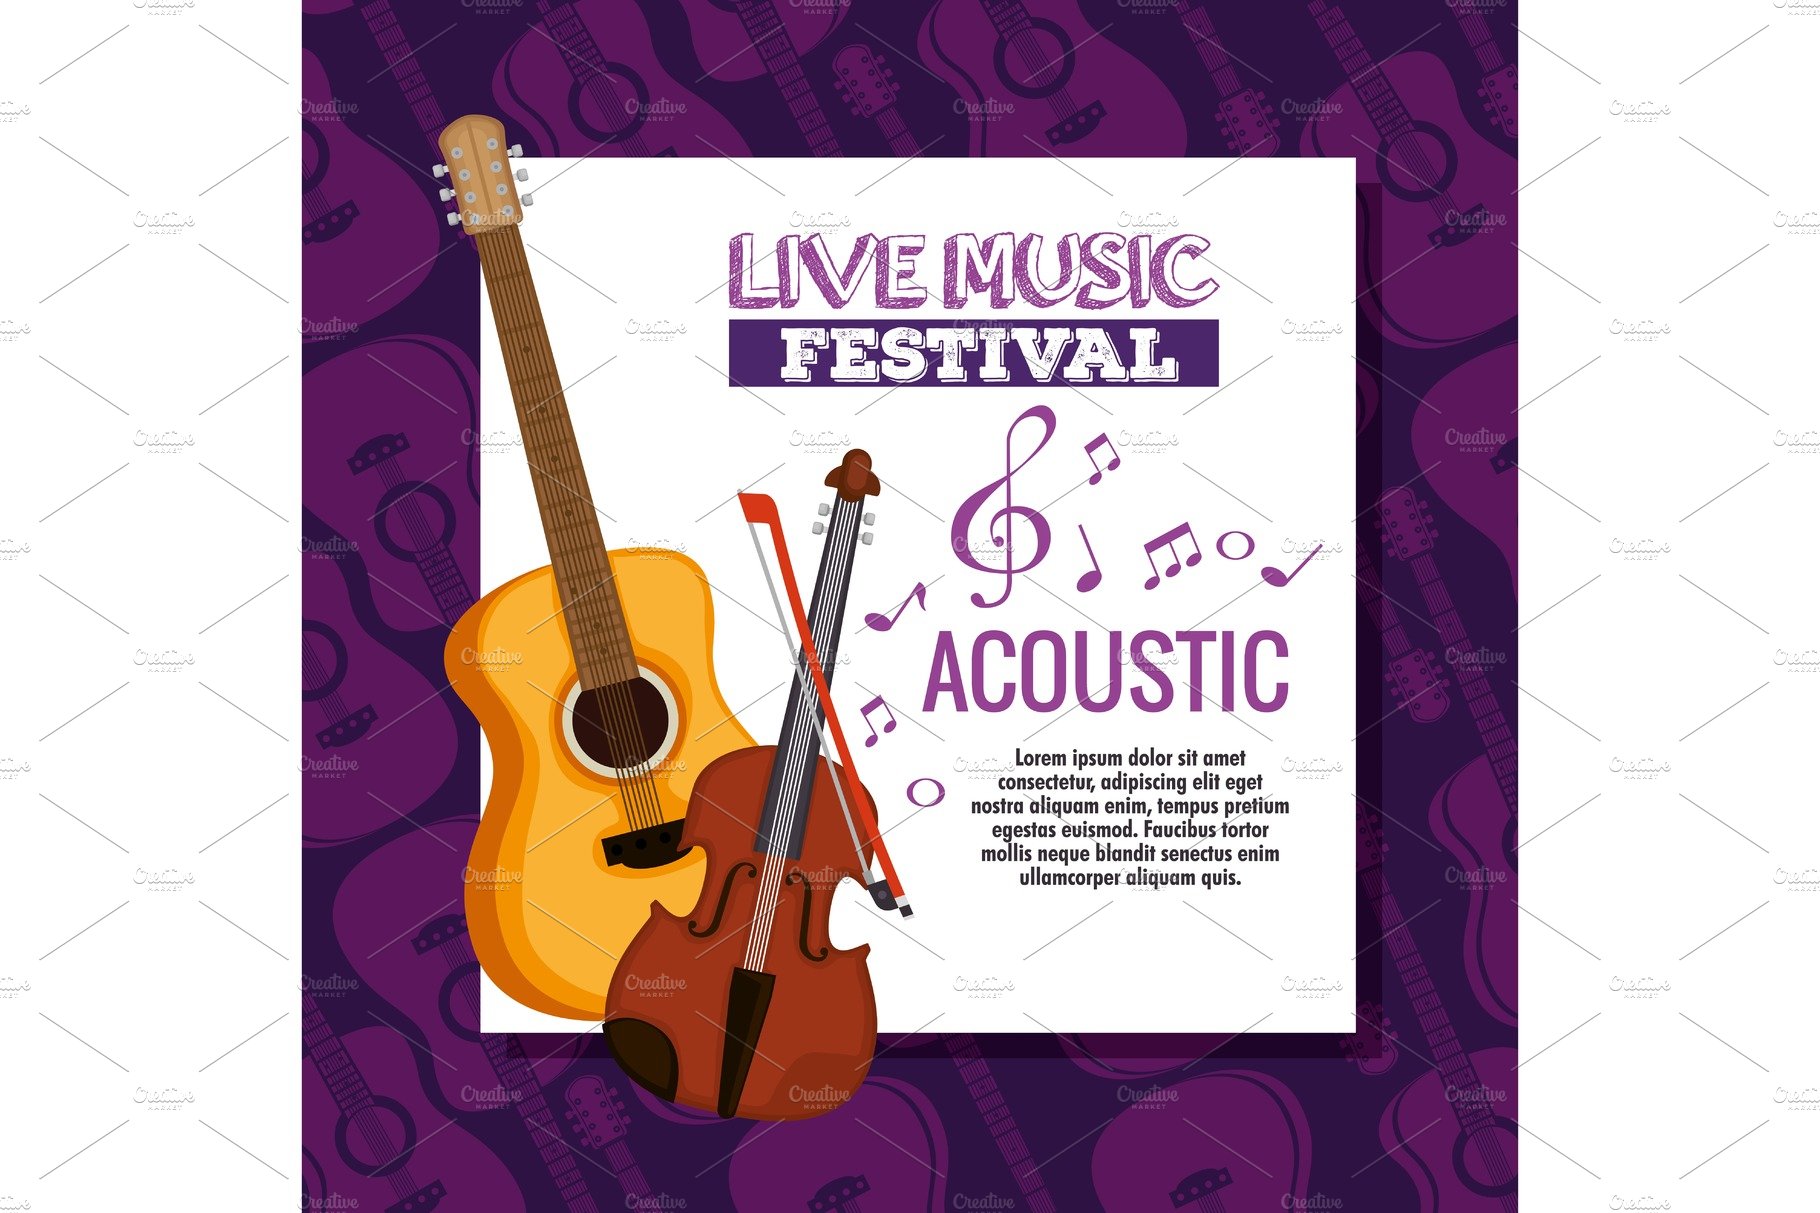 guitar acoustic instrument label cover image.